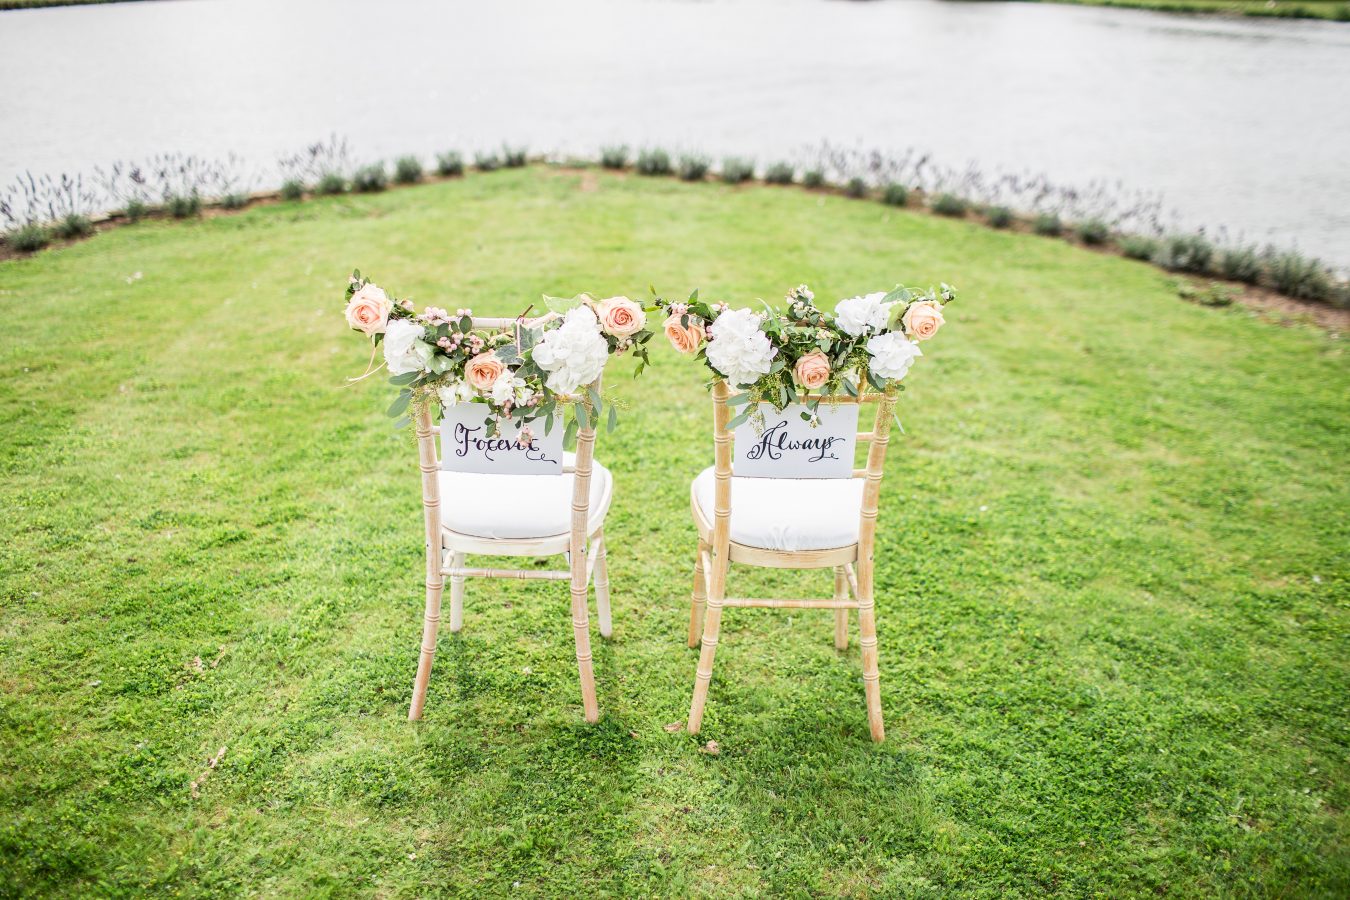 Bride & Groom decorative wedding chairs 